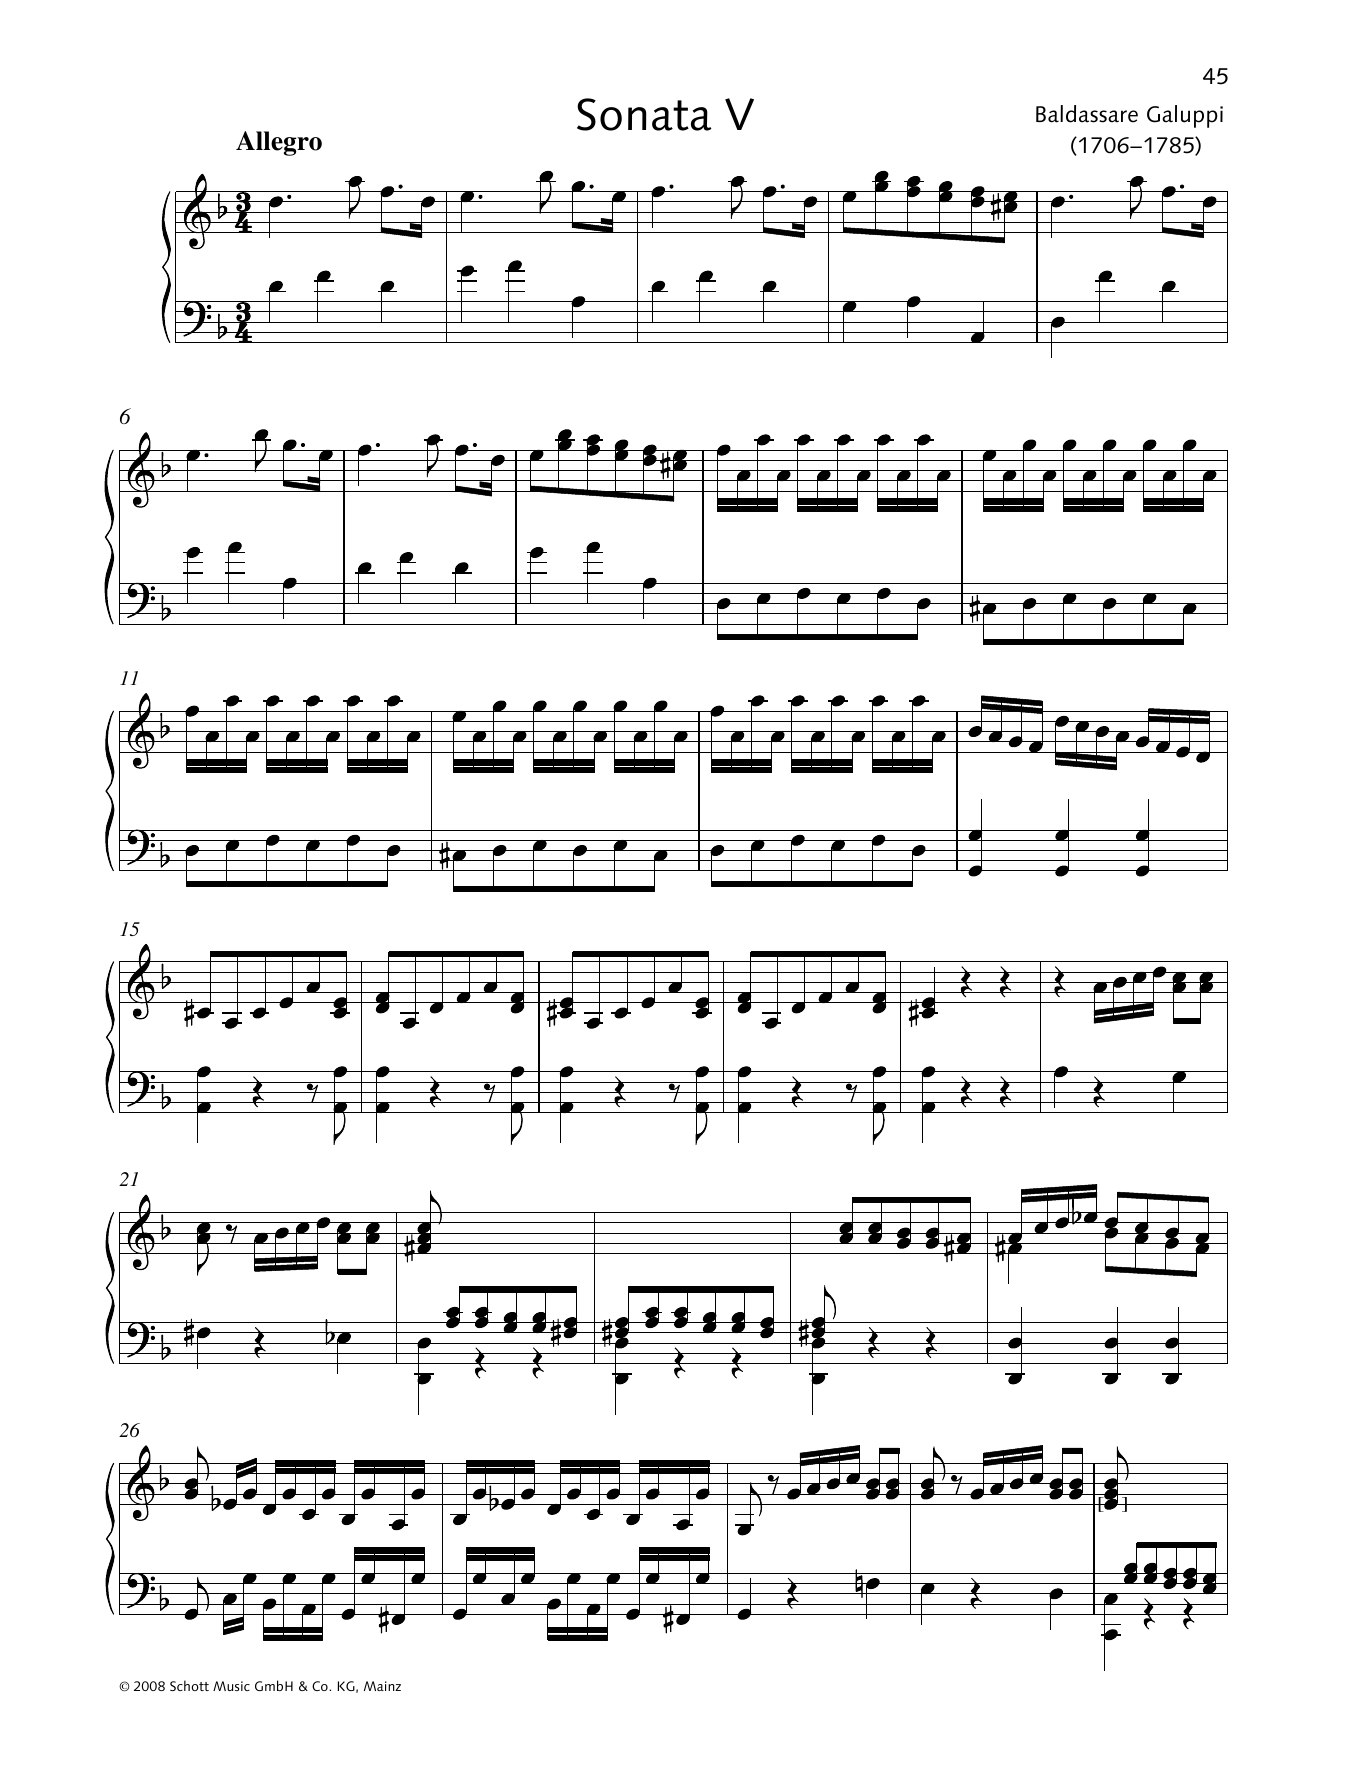 Baldassare Galuppi Sonata V D minor sheet music notes and chords arranged for Piano Solo